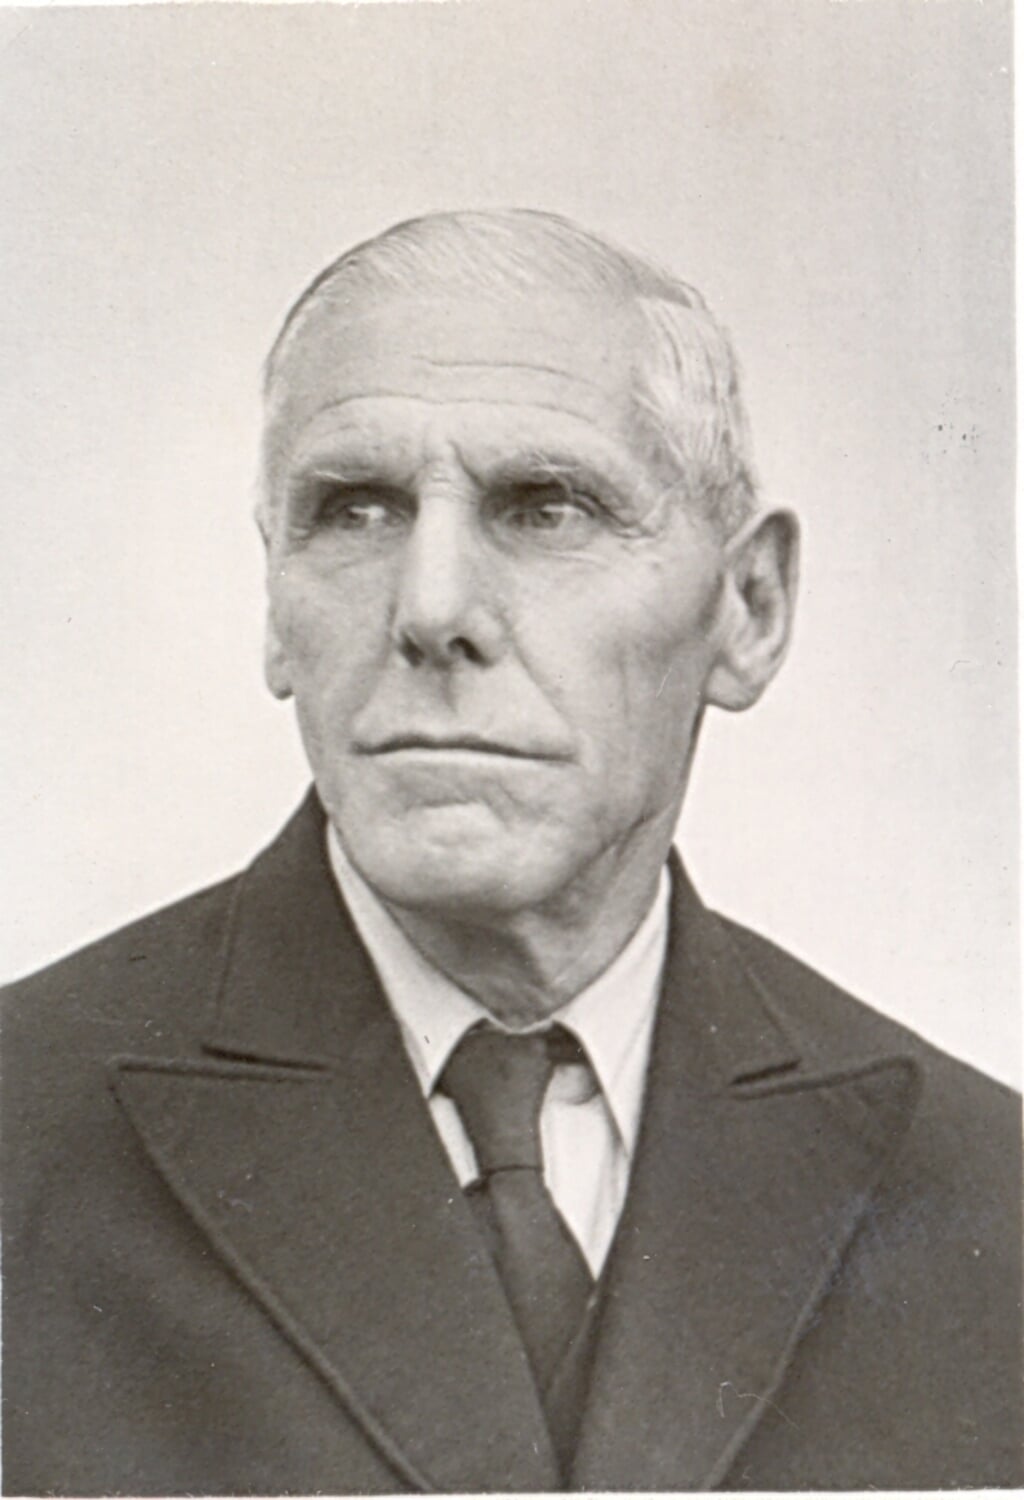 J. Vroegindeweij Lzn. (1873-1953).